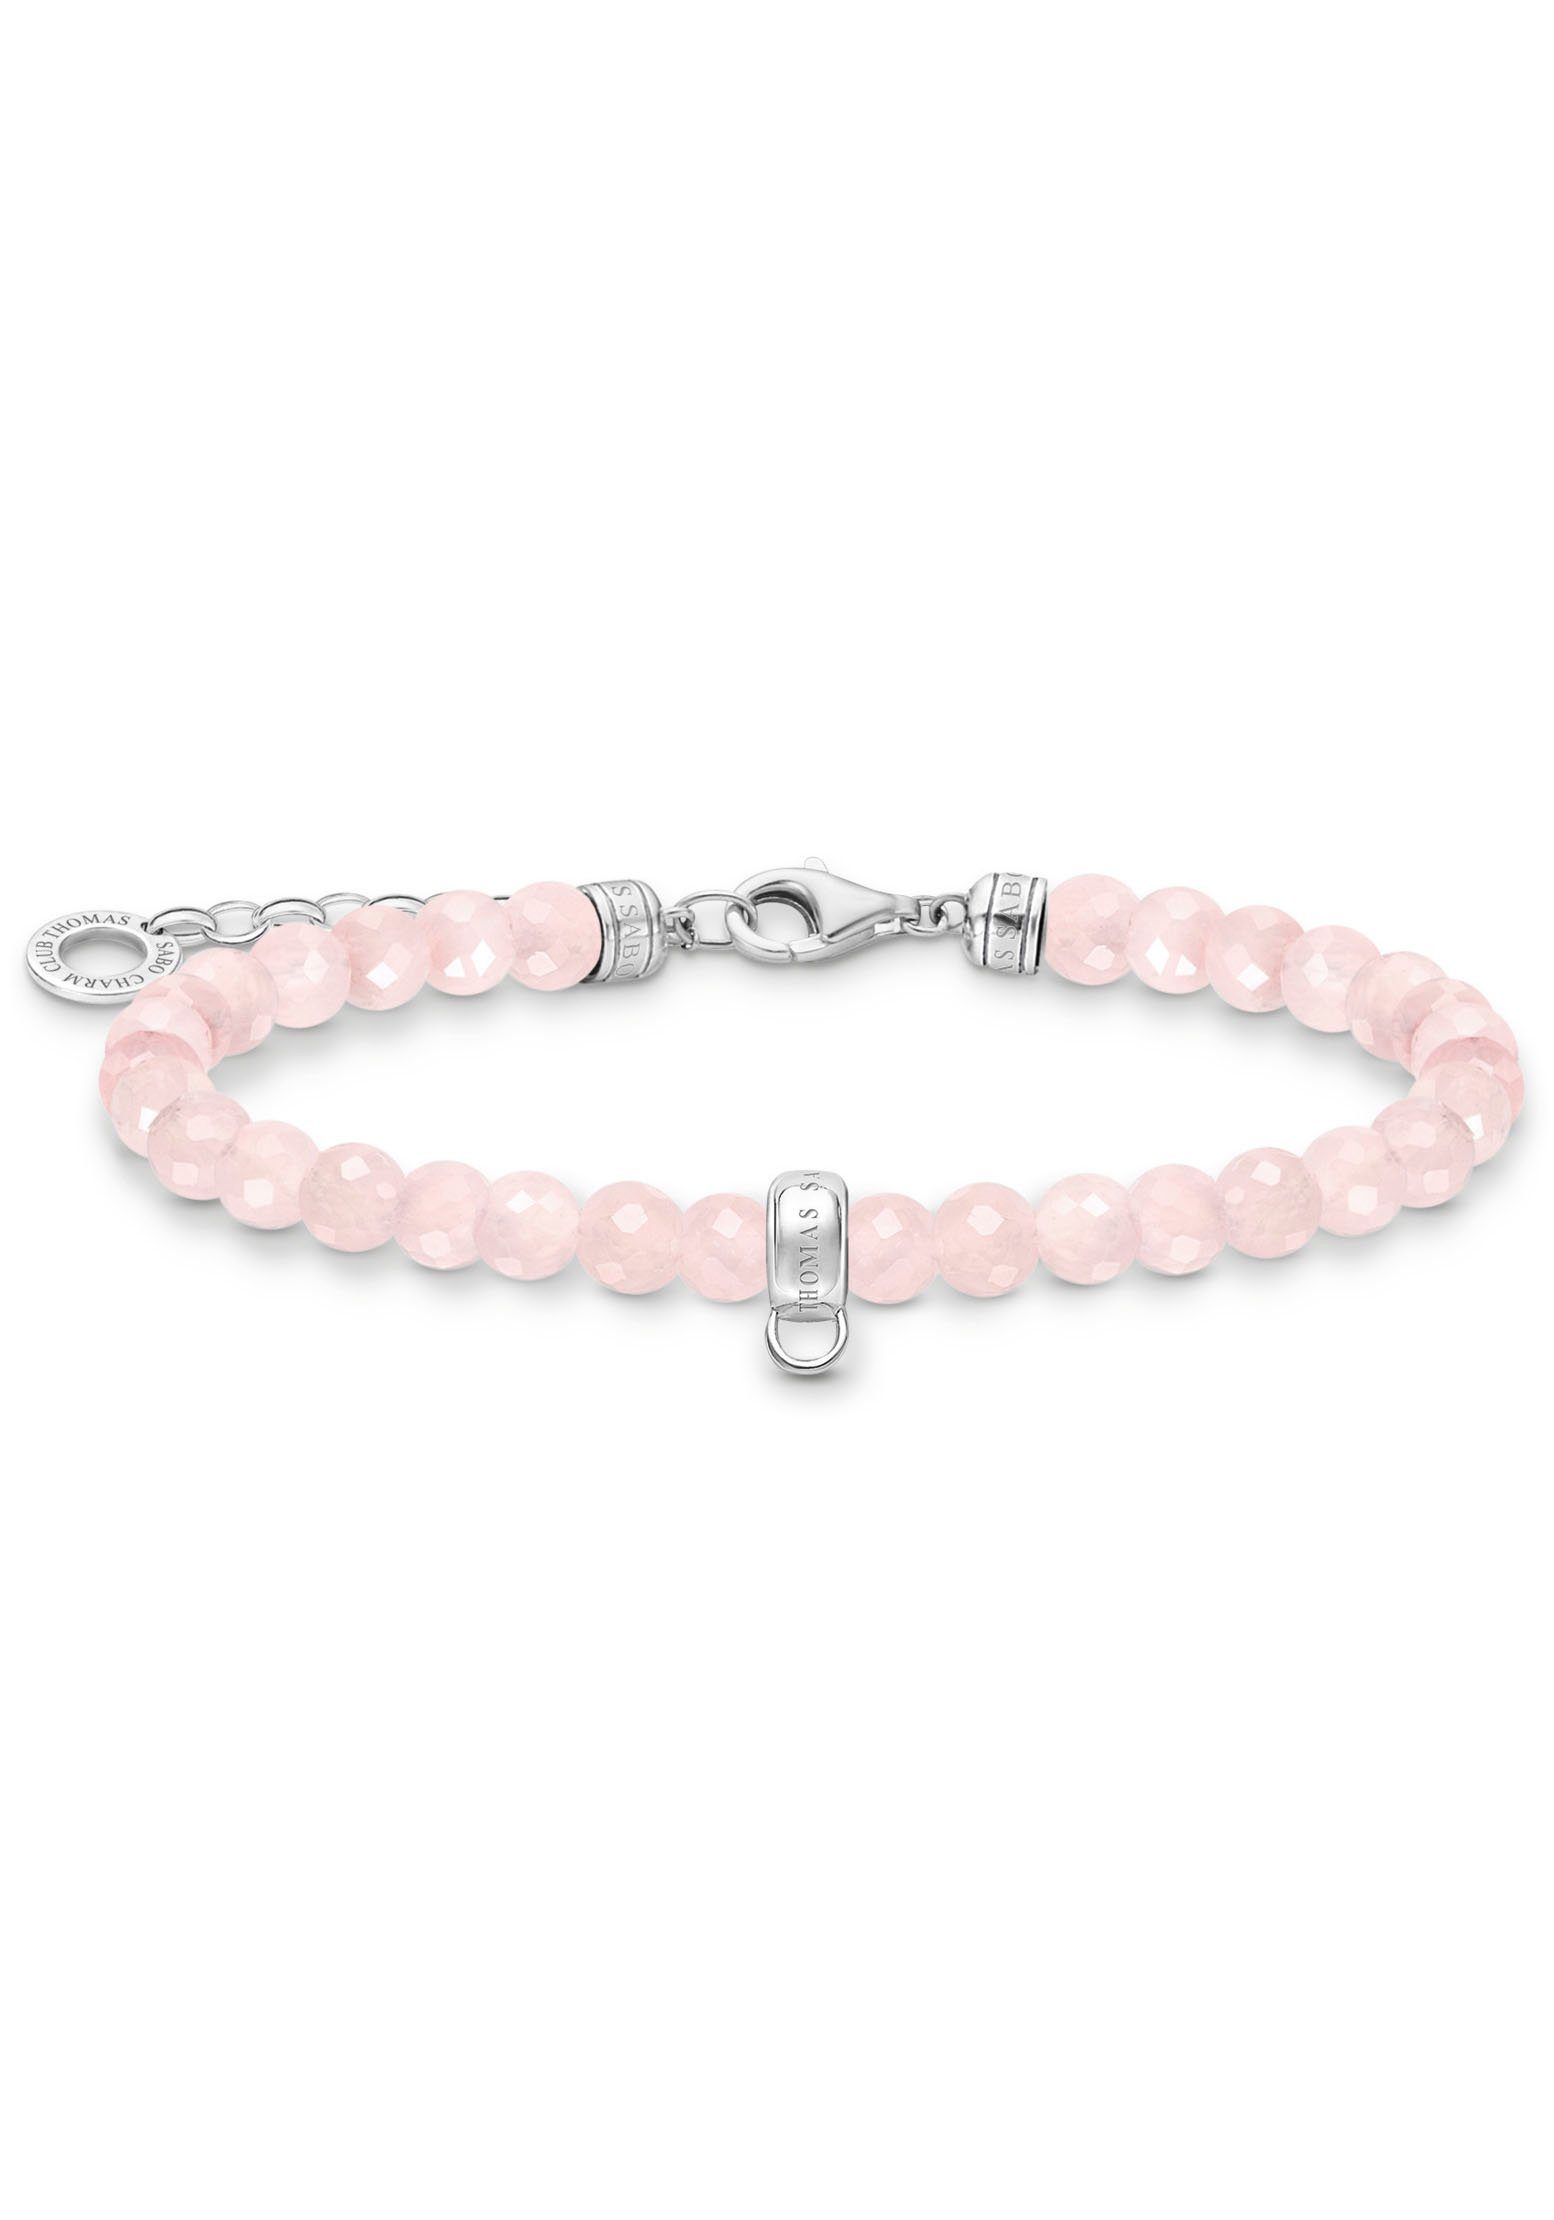 THOMAS SABO Armband rosa Perlen, schwarze Perlen, A2097-034-9-L19V, A2097-130-11-L19V, mit Rosenquarz oder Onyx silberfarben-pink